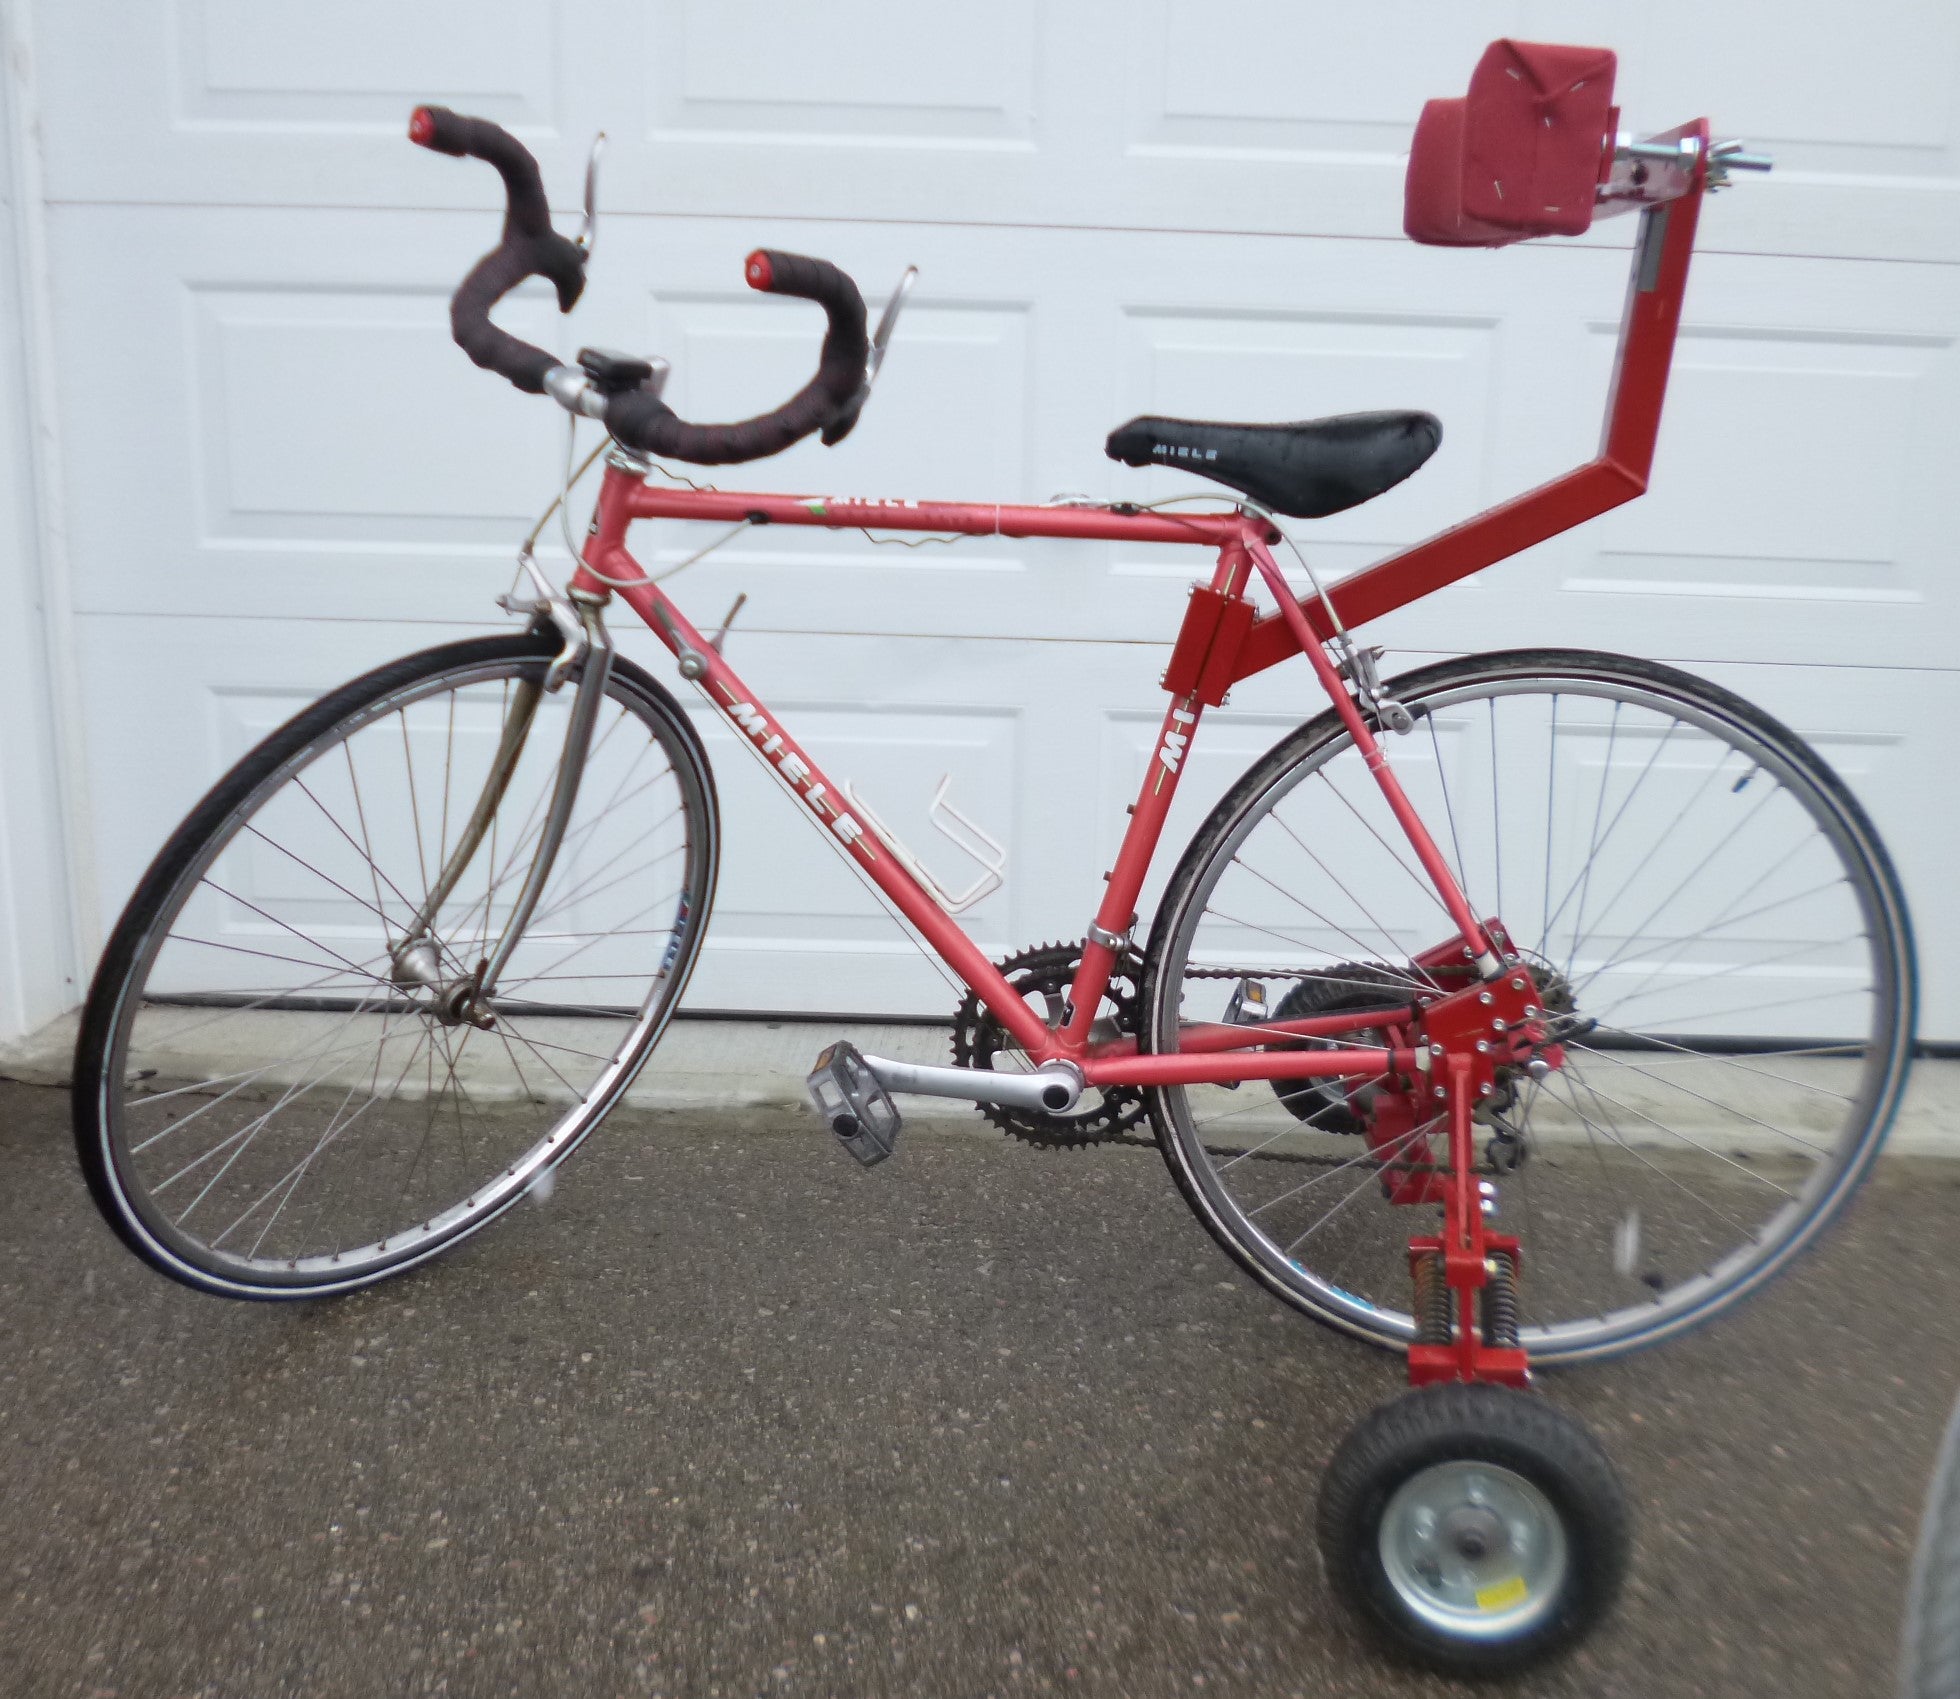 Bicycle prototype